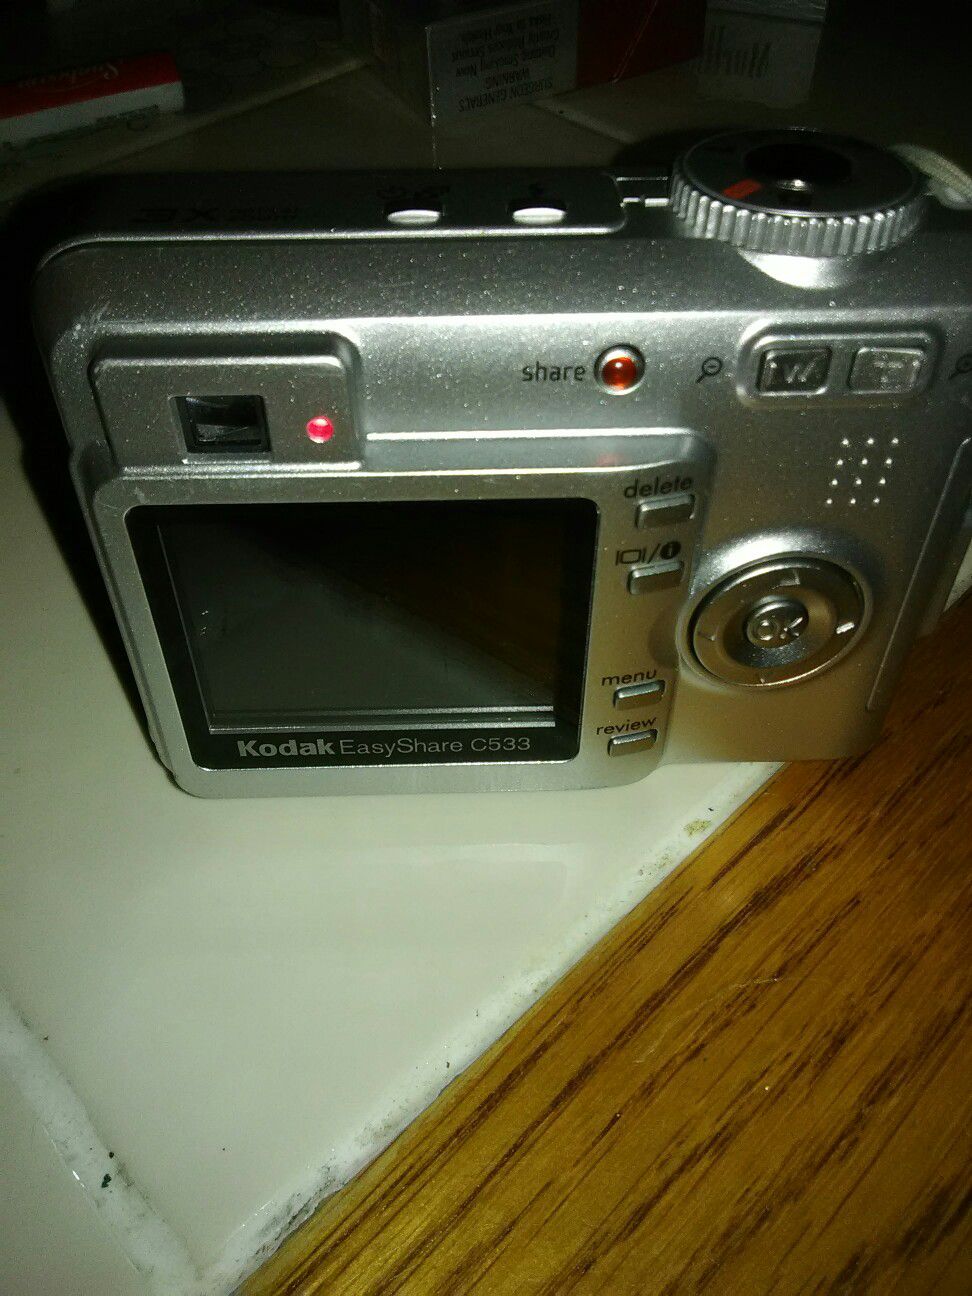 Kodak easyshare c533 digital camera